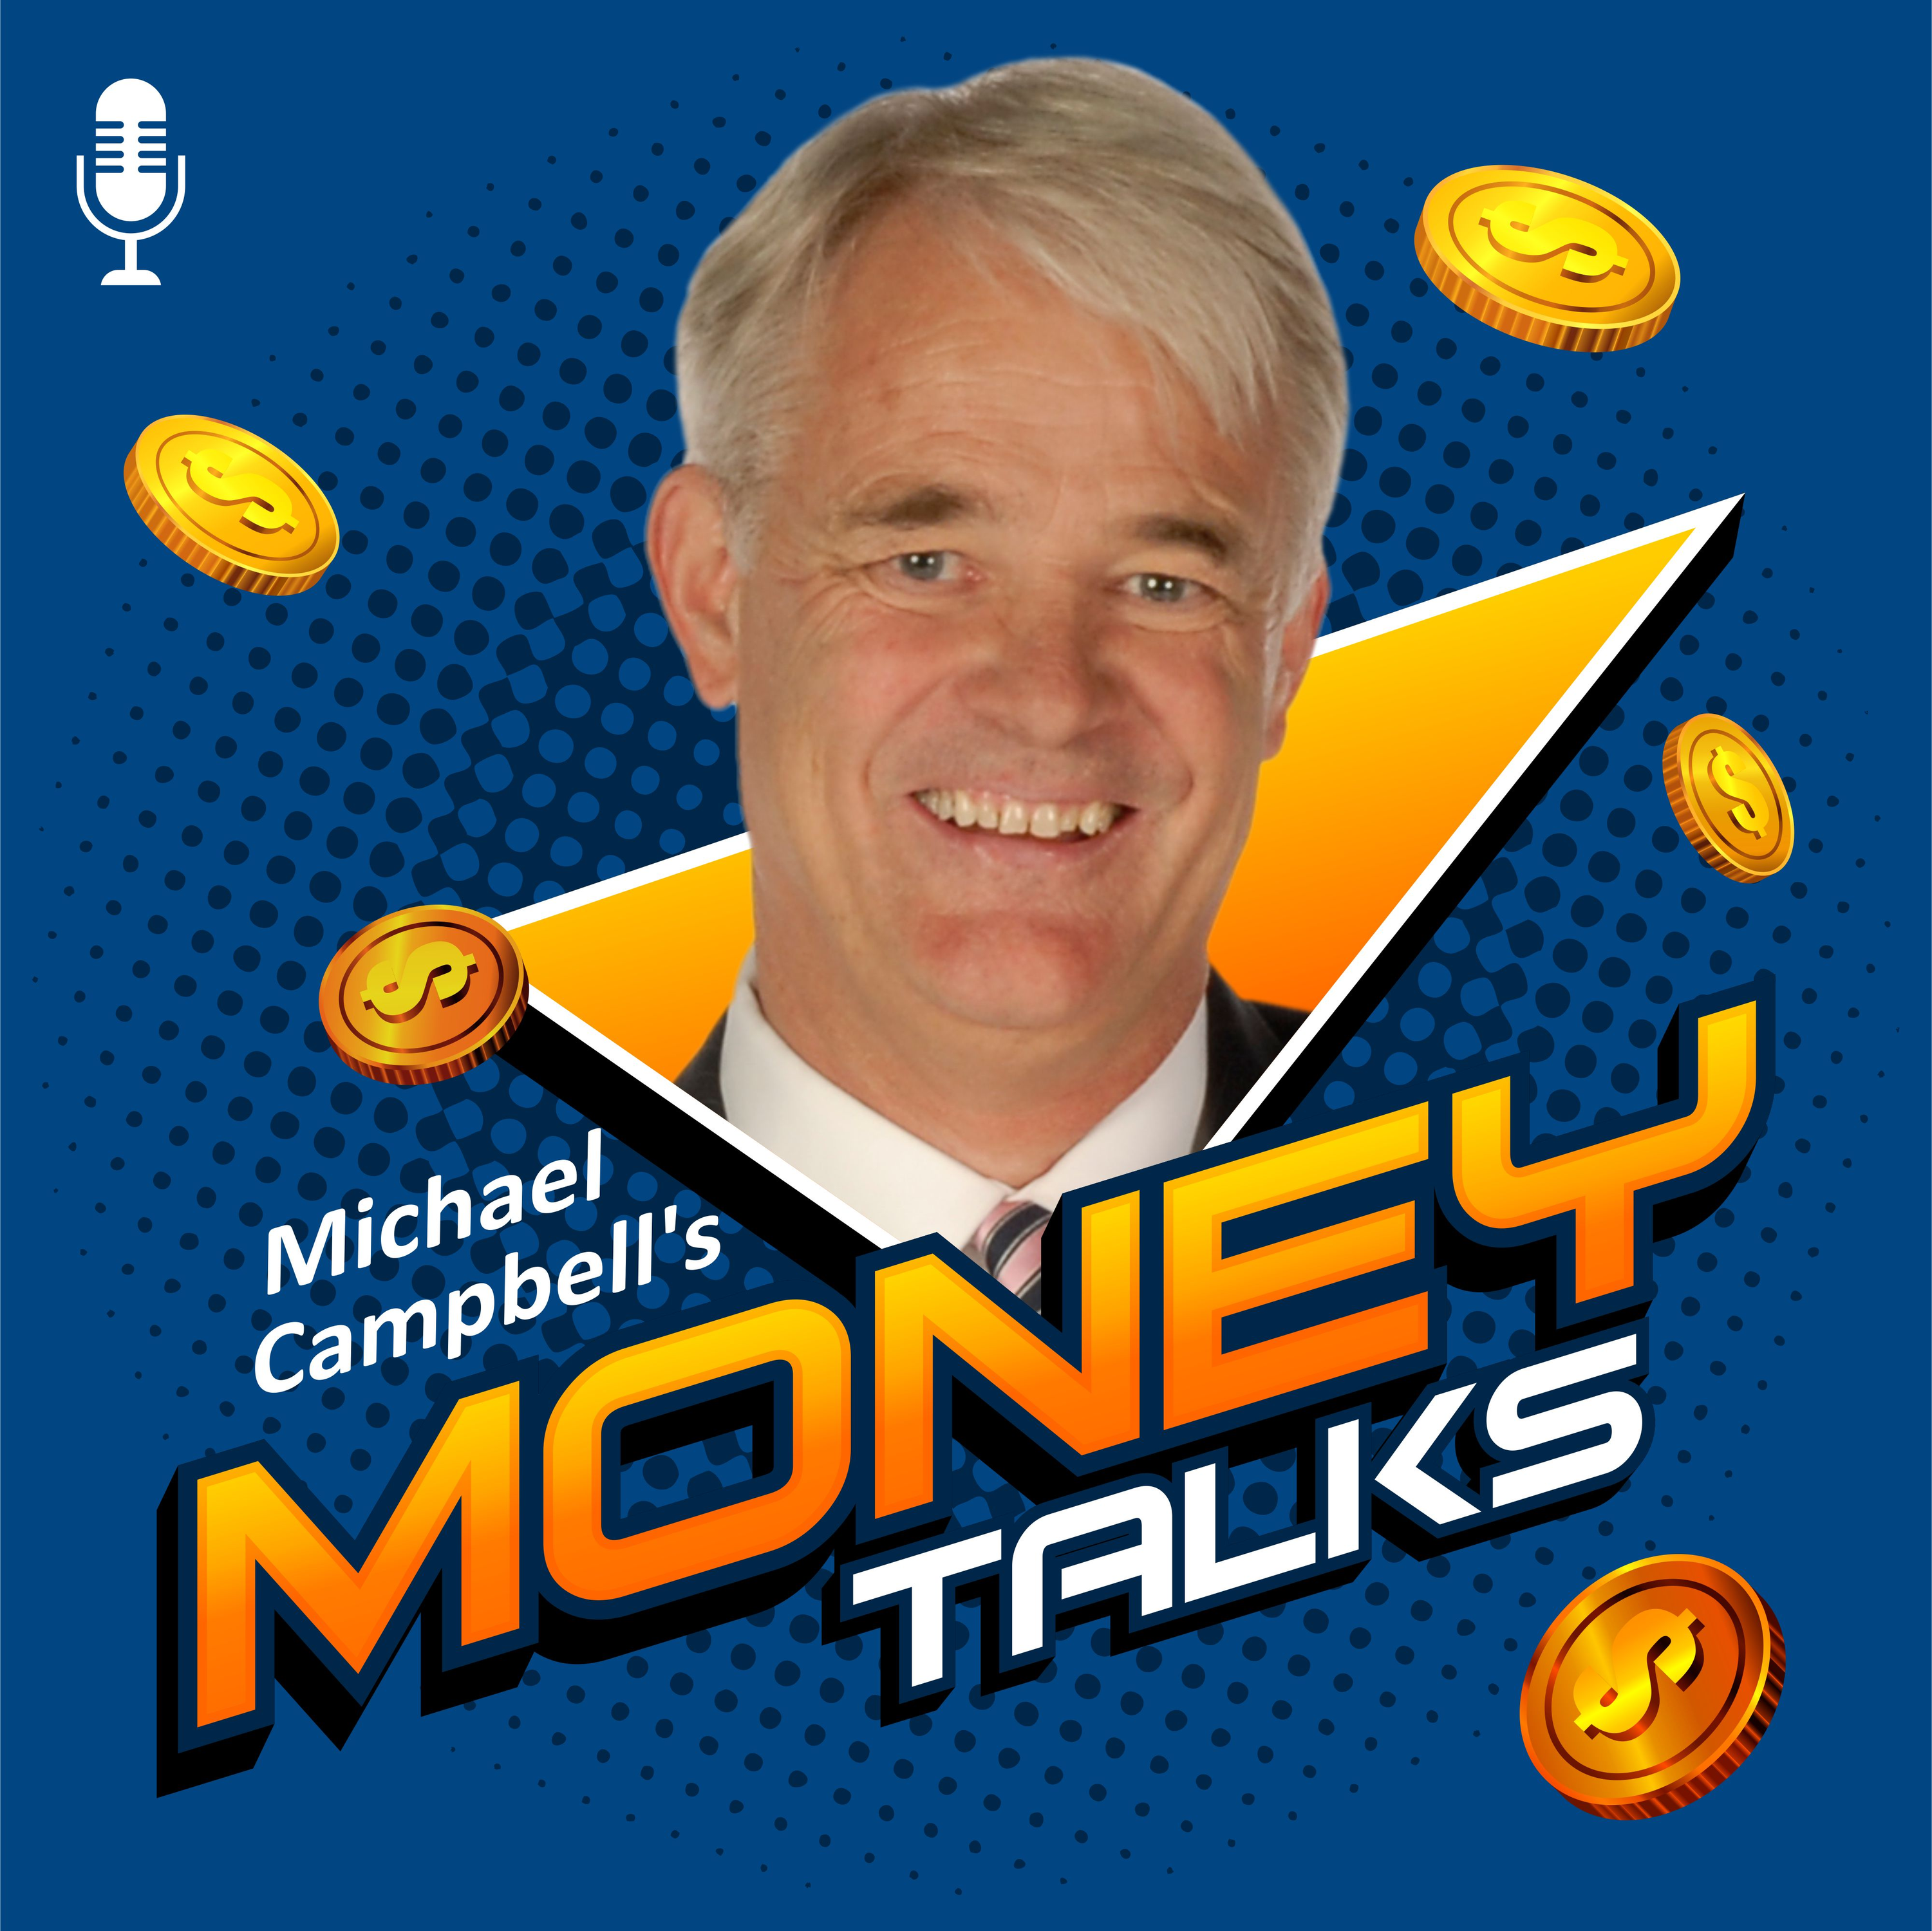 Money Talks - July 13 Complete Show